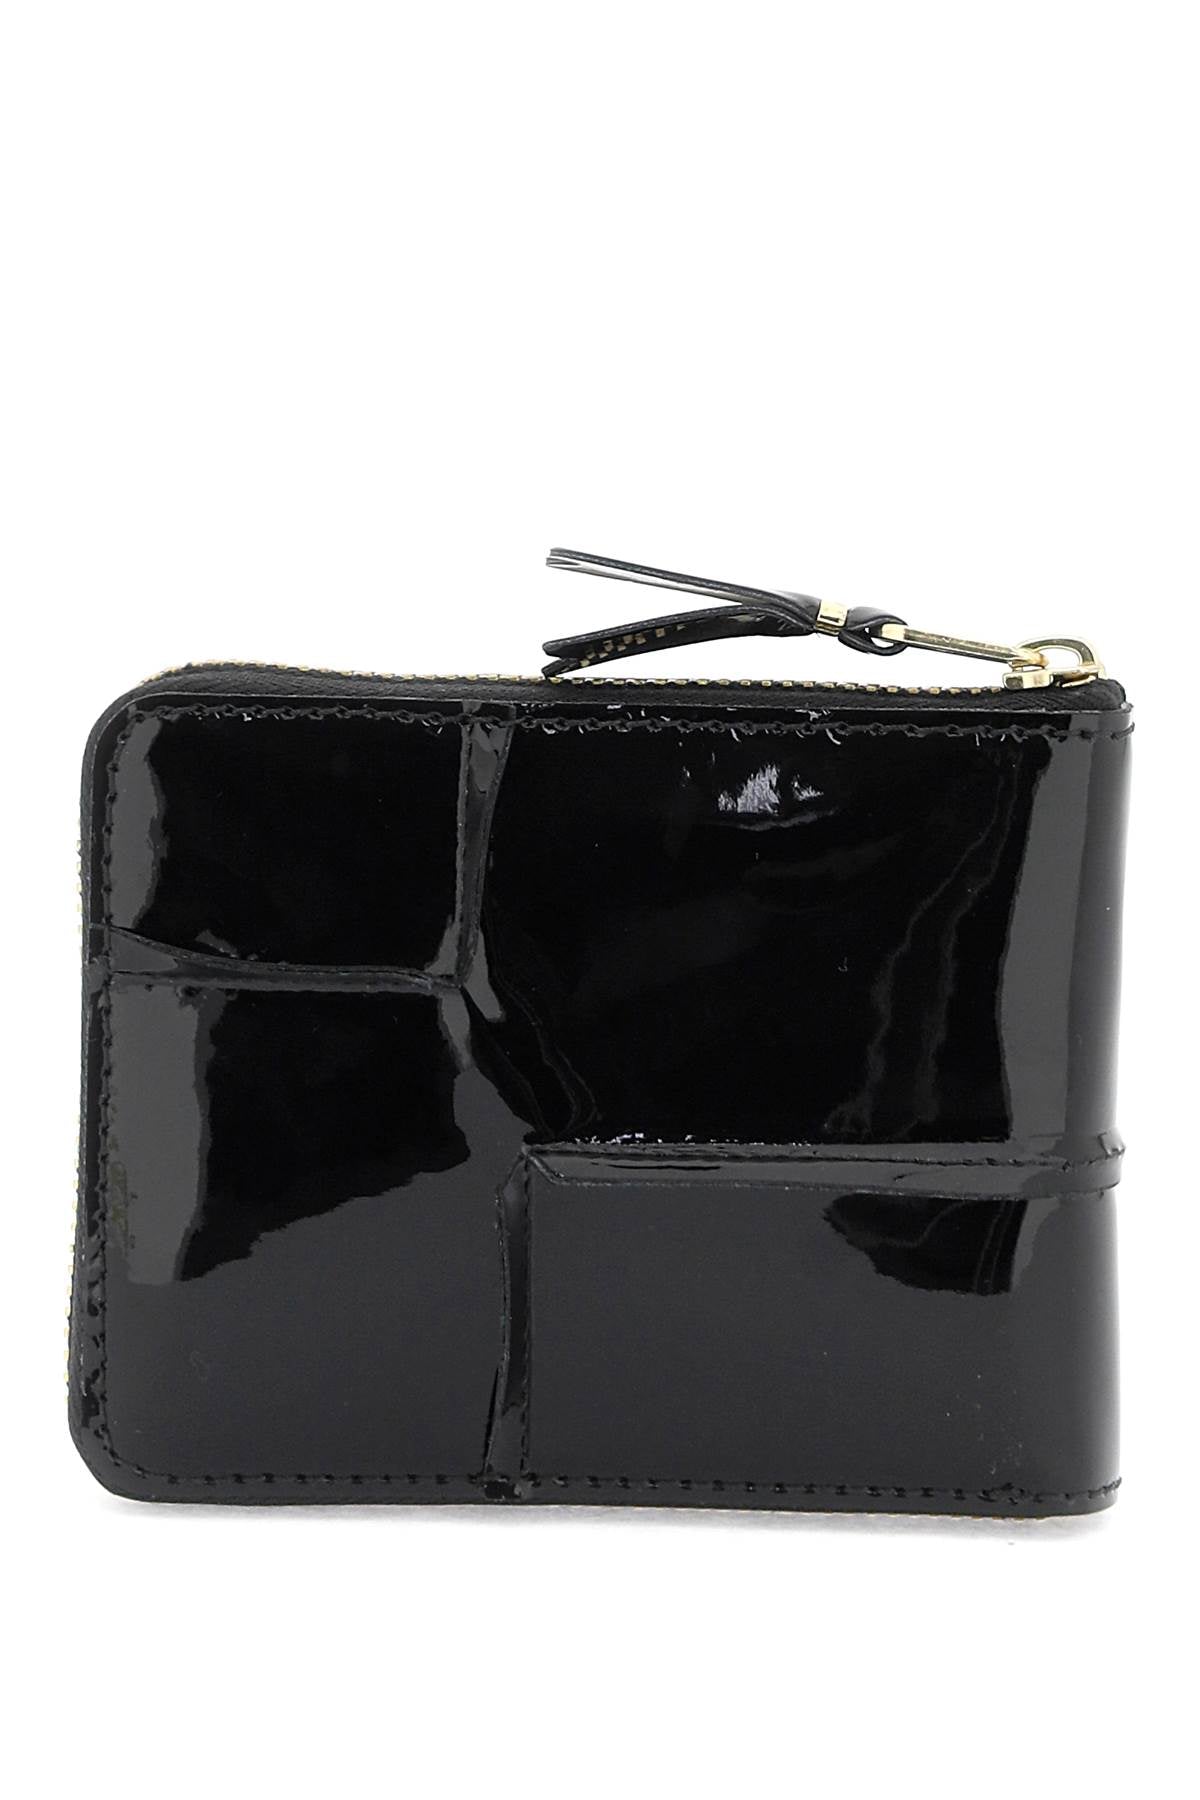 Comme Des Garcons Wallet Zip Around Patent Leather Wallet With Zipper   Black